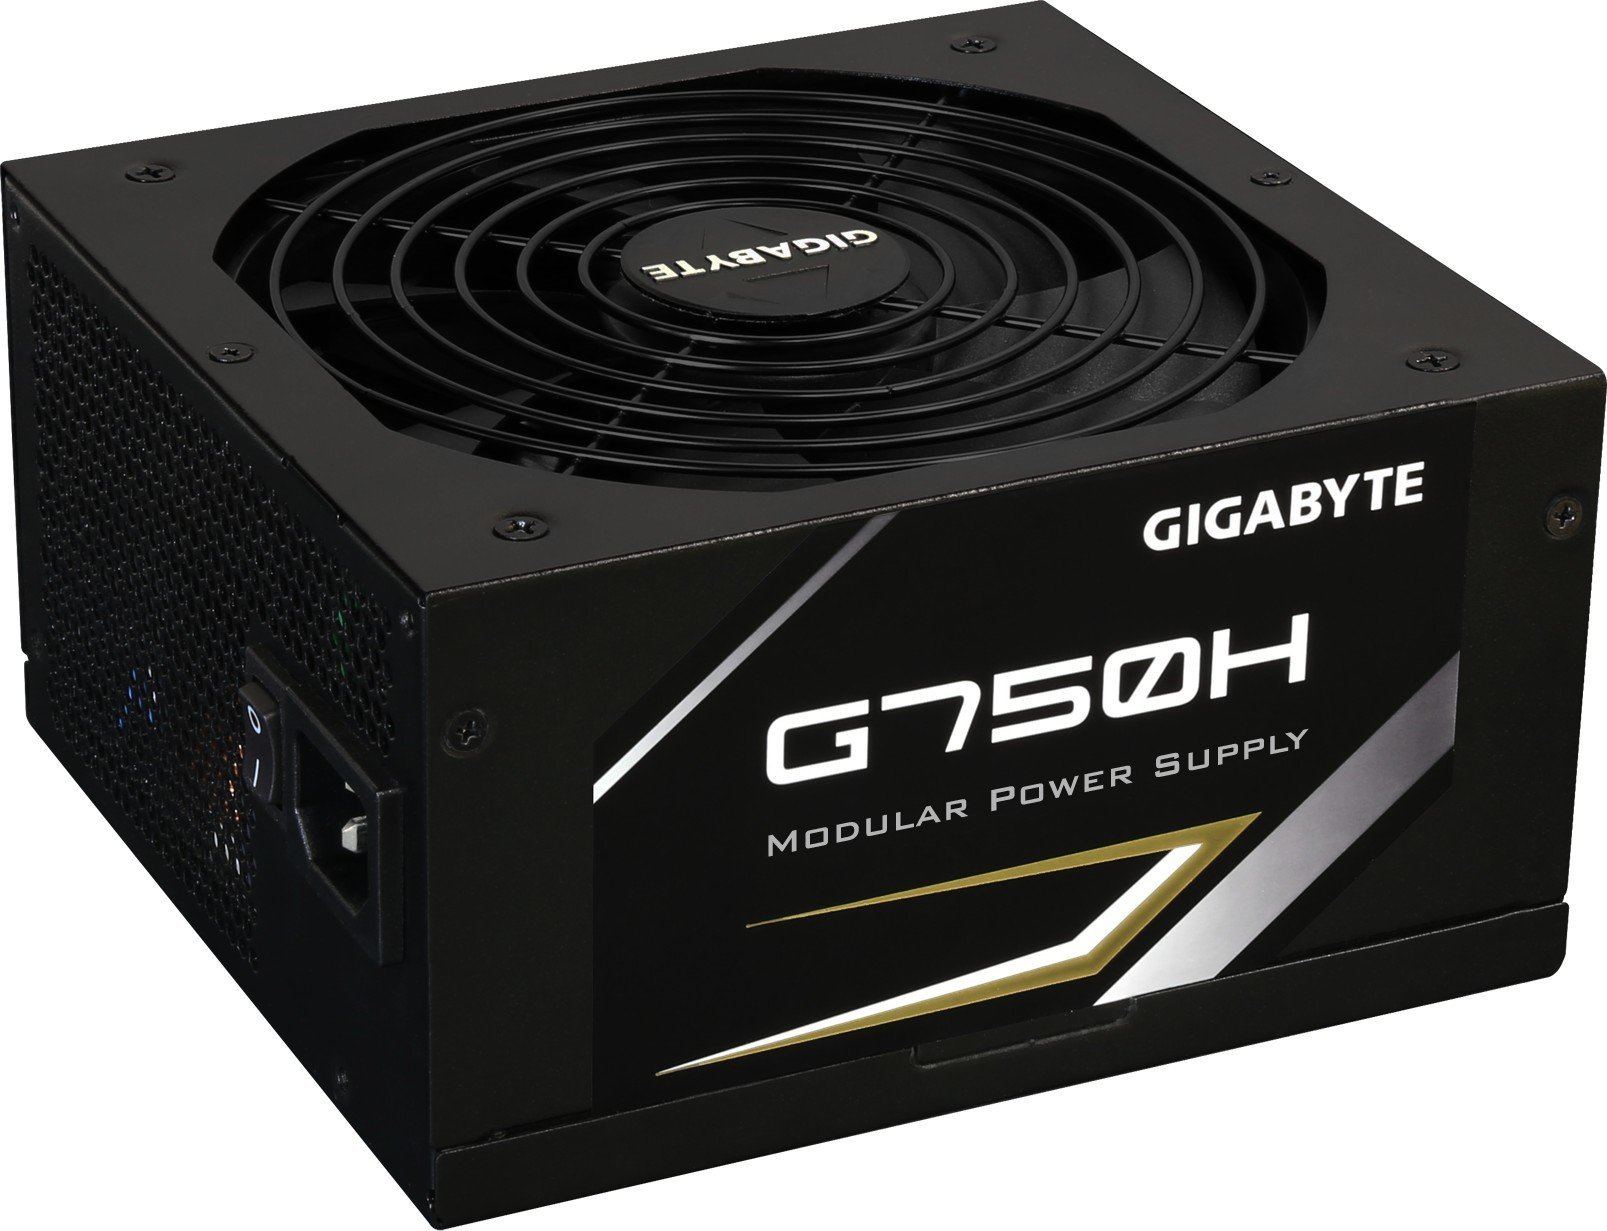 Gigabyte GP-G750H